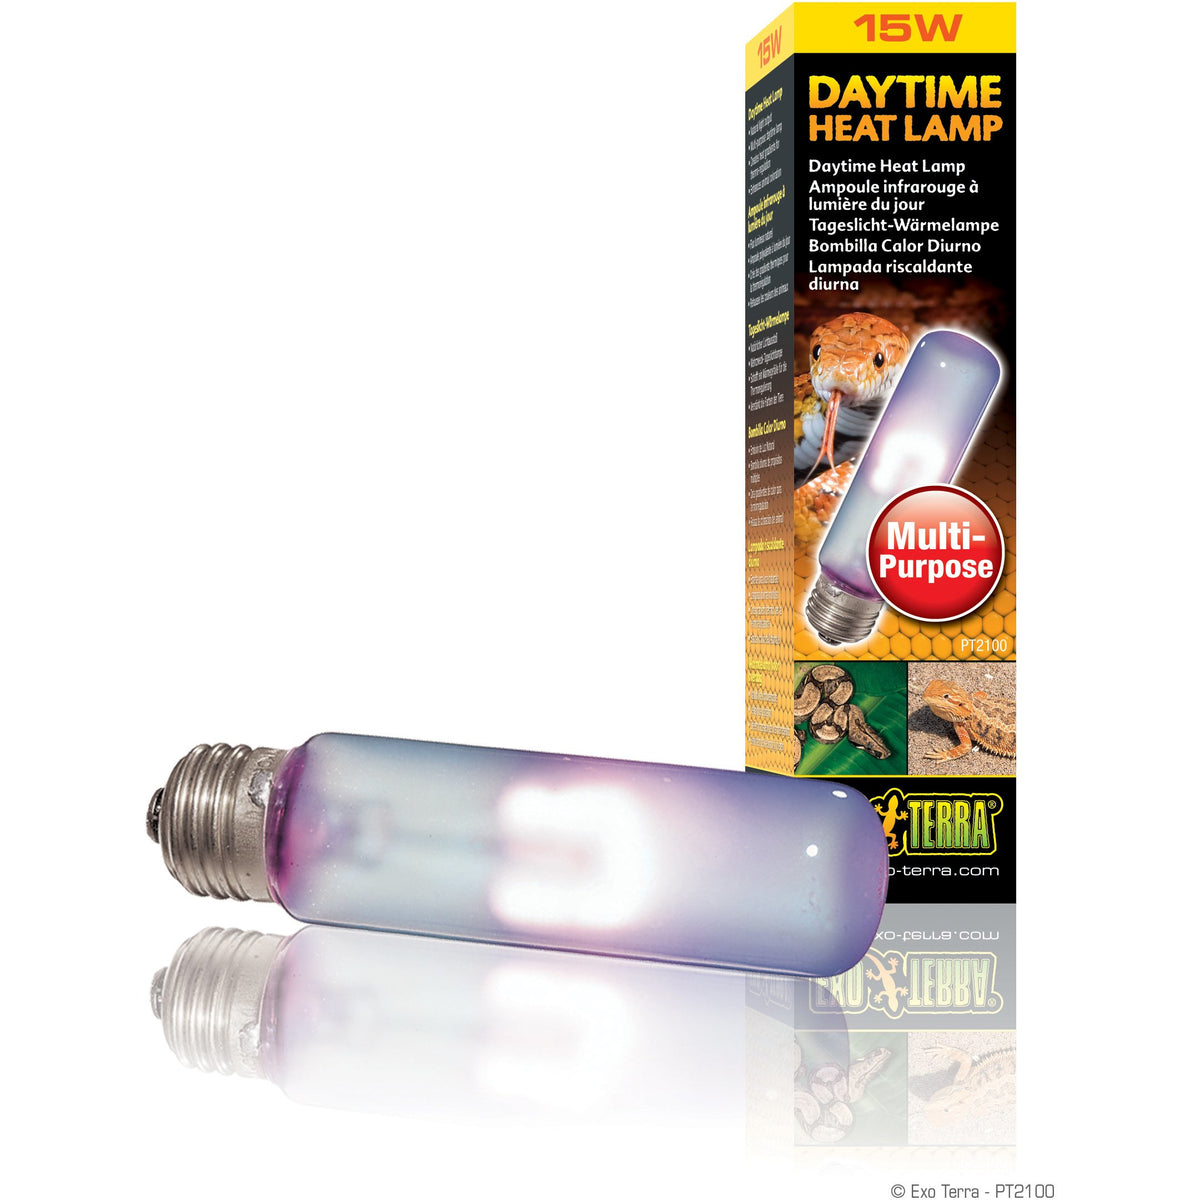 Exo Terra Daytime Heat Lamp - T10 / 15 W